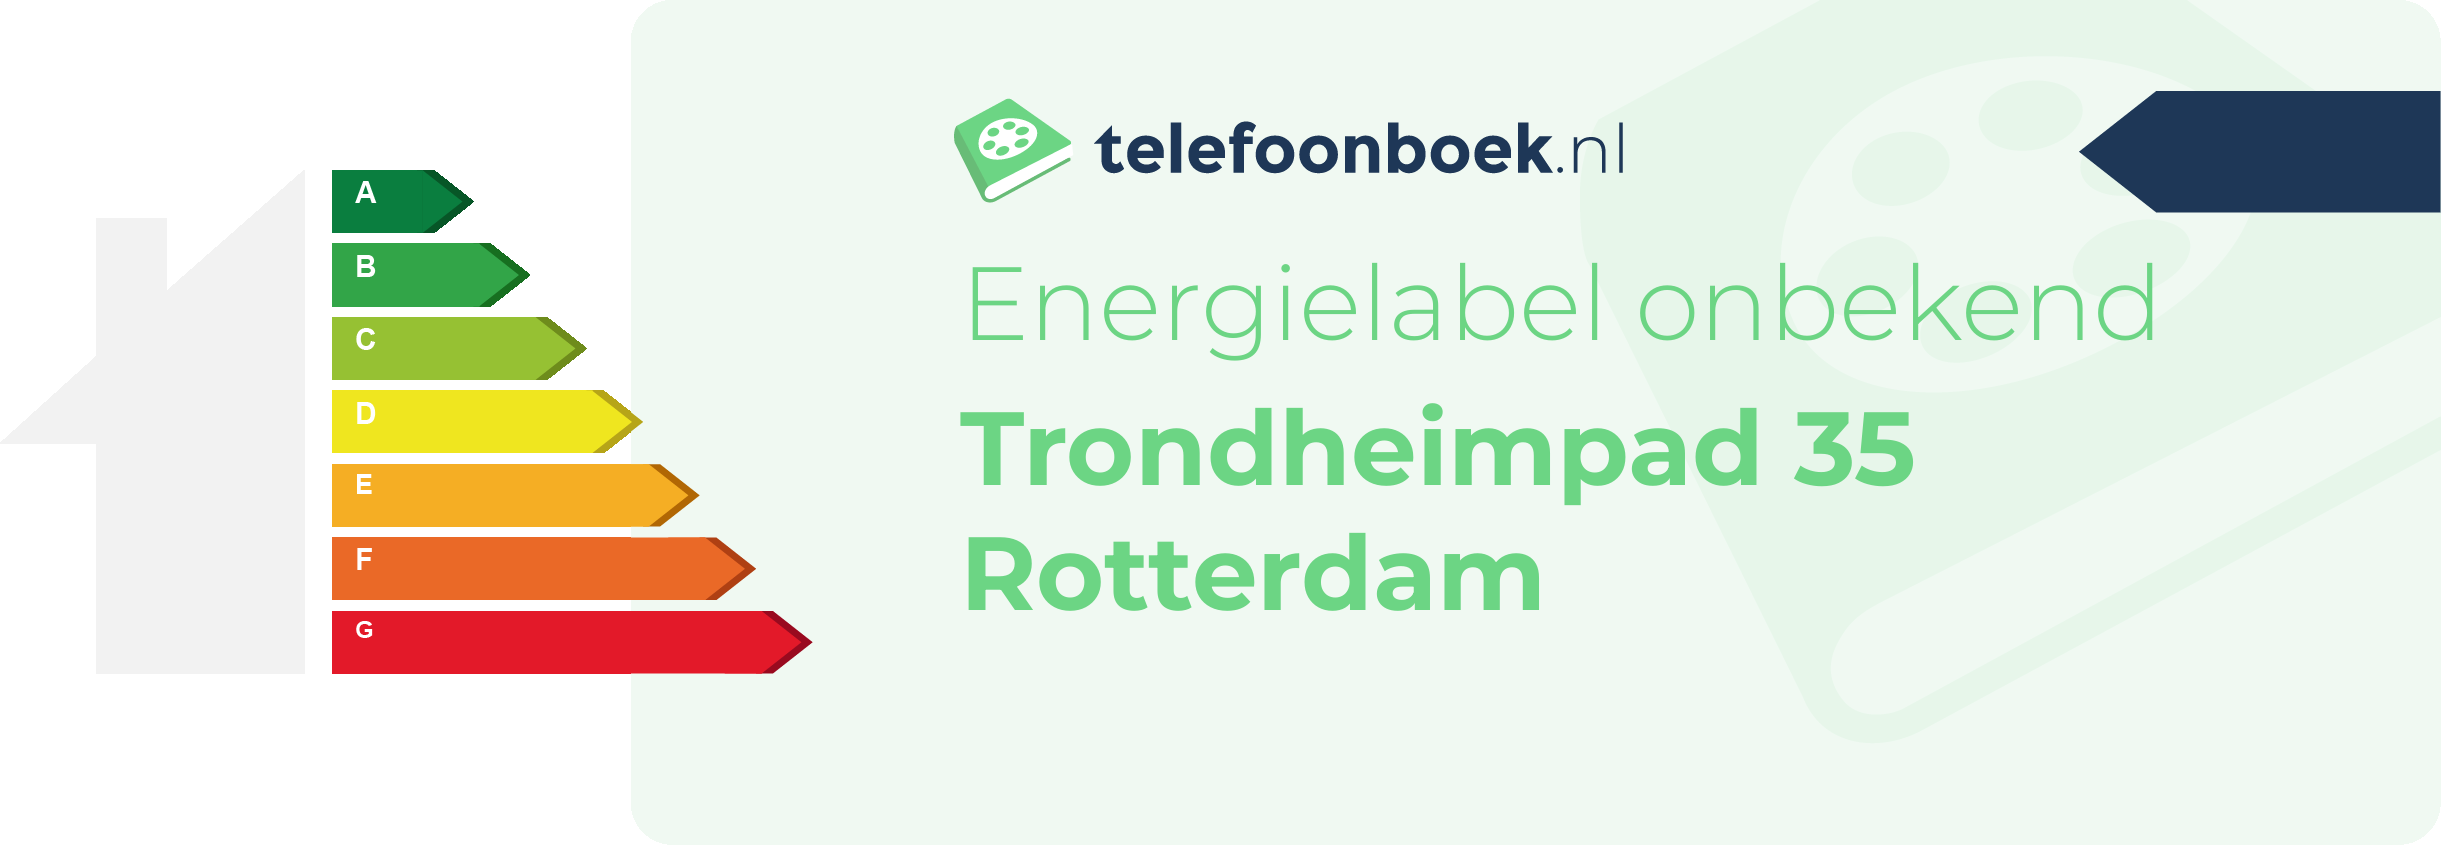 Energielabel Trondheimpad 35 Rotterdam